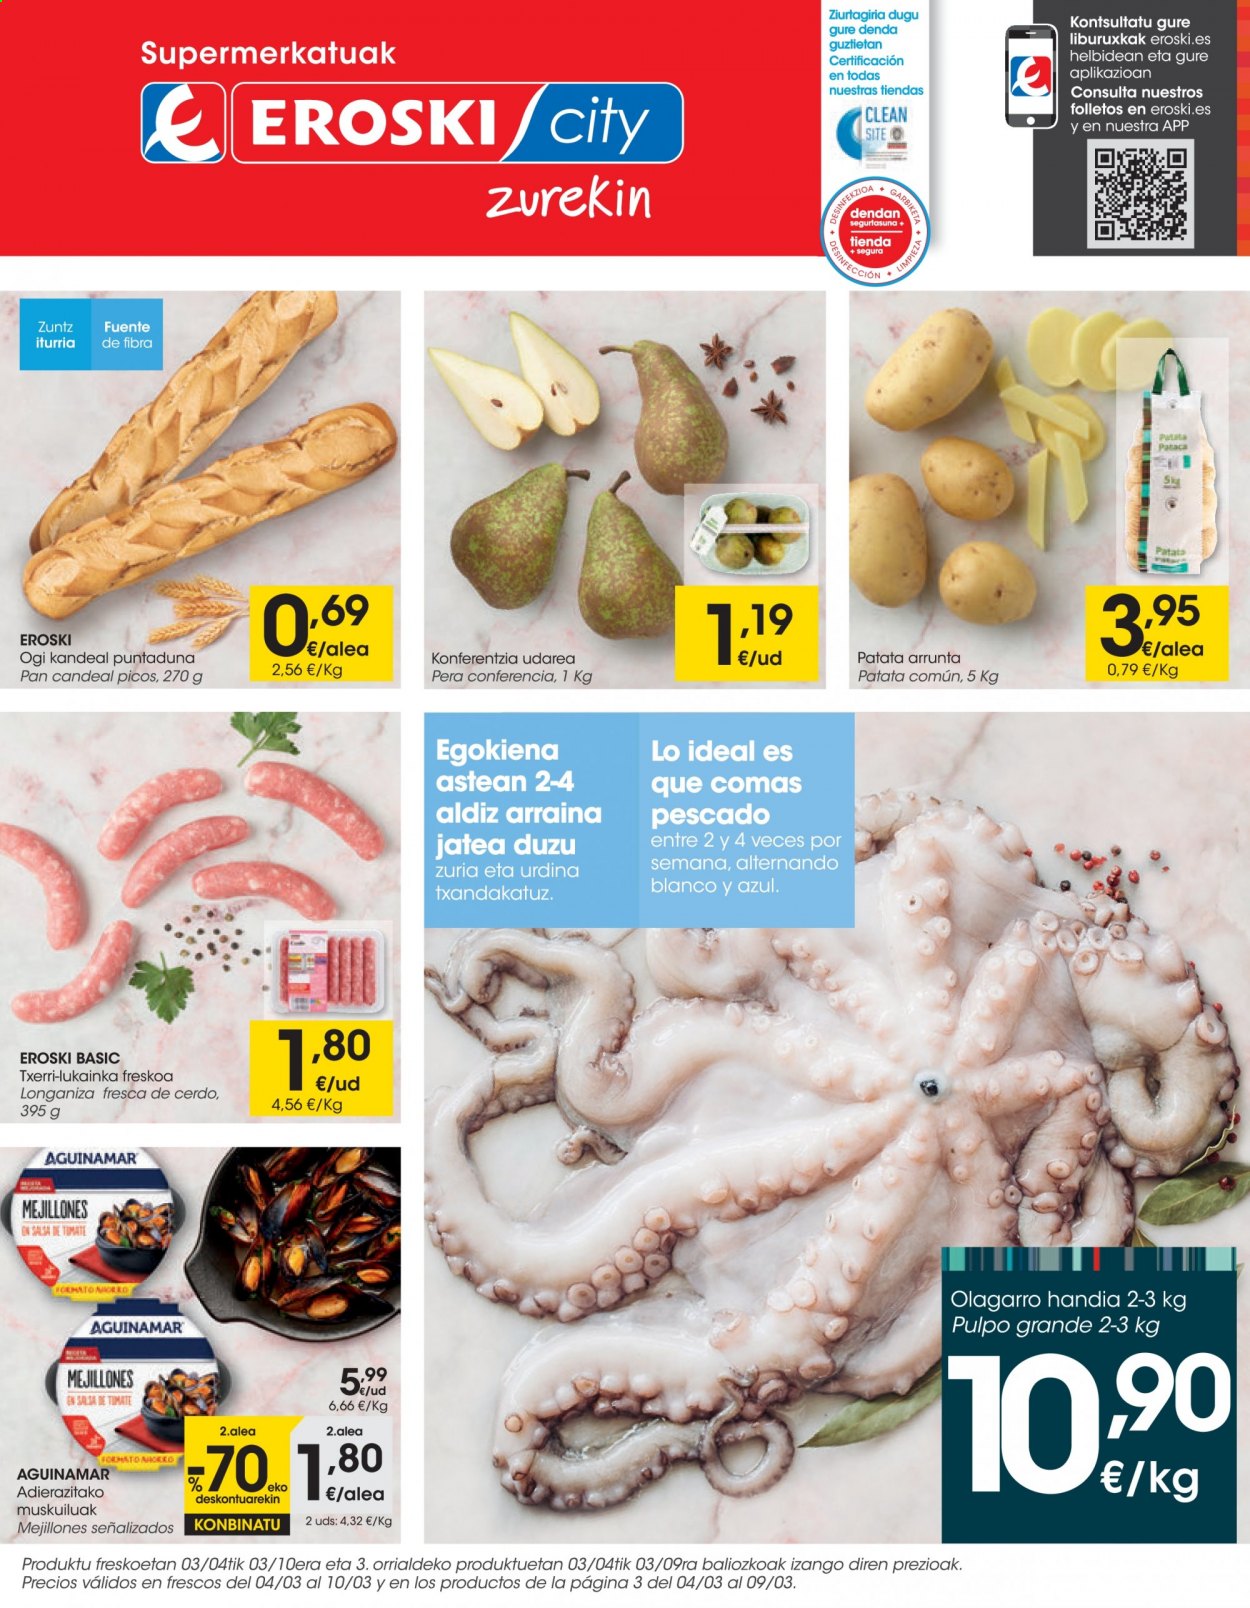 thumbnail - Folleto actual Eroski - 04/03/21 - 10/03/21 - Ventas - pera, patatas, pan, pan candeal, mejillones, pulpo, pescado. Página 1.